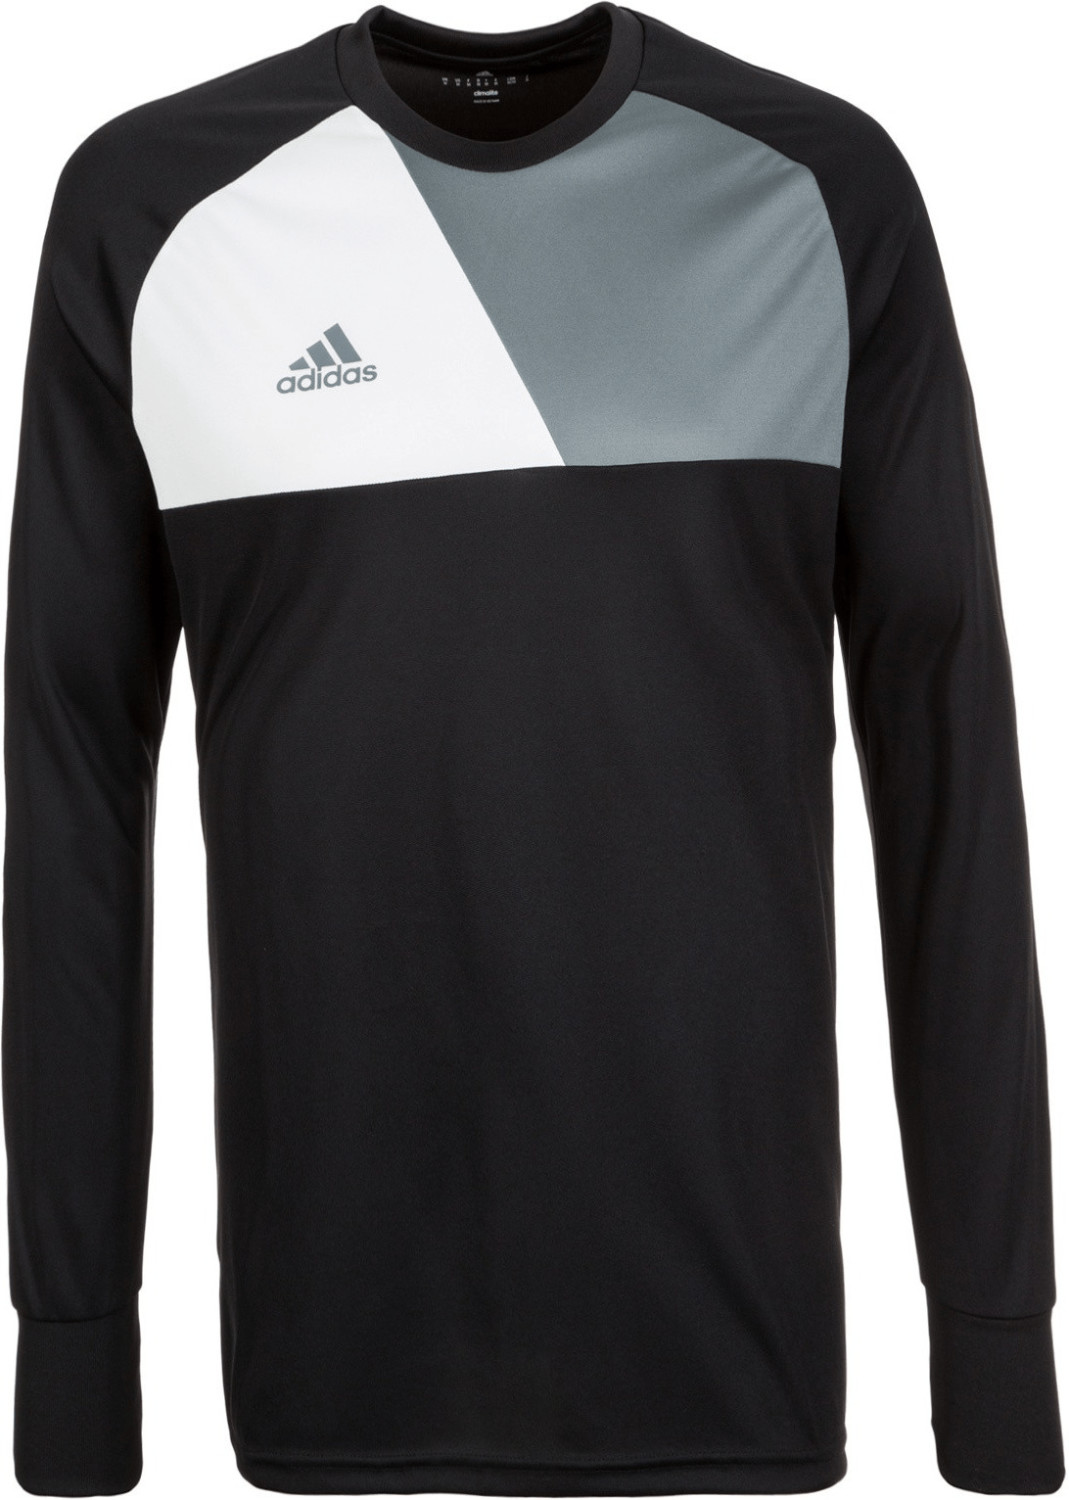 Adidas Assita 17 Goalkeeper Jersey Youth black/grey